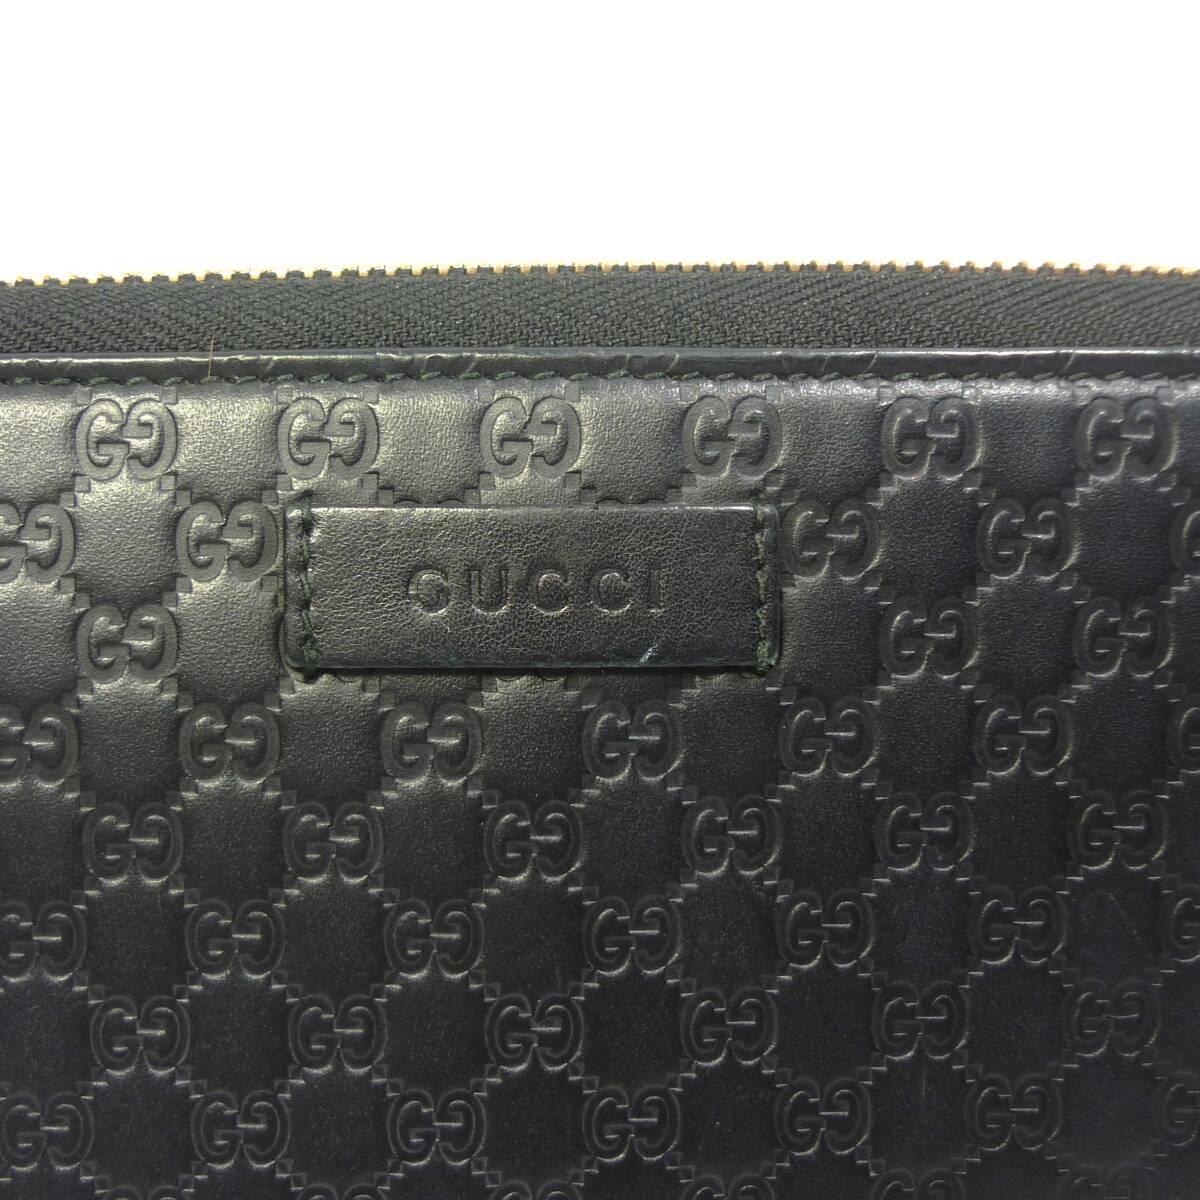  Gucci (GUCCI) Guccisima раунд застежка-молния длинный кошелек 449391-527545( б/у )